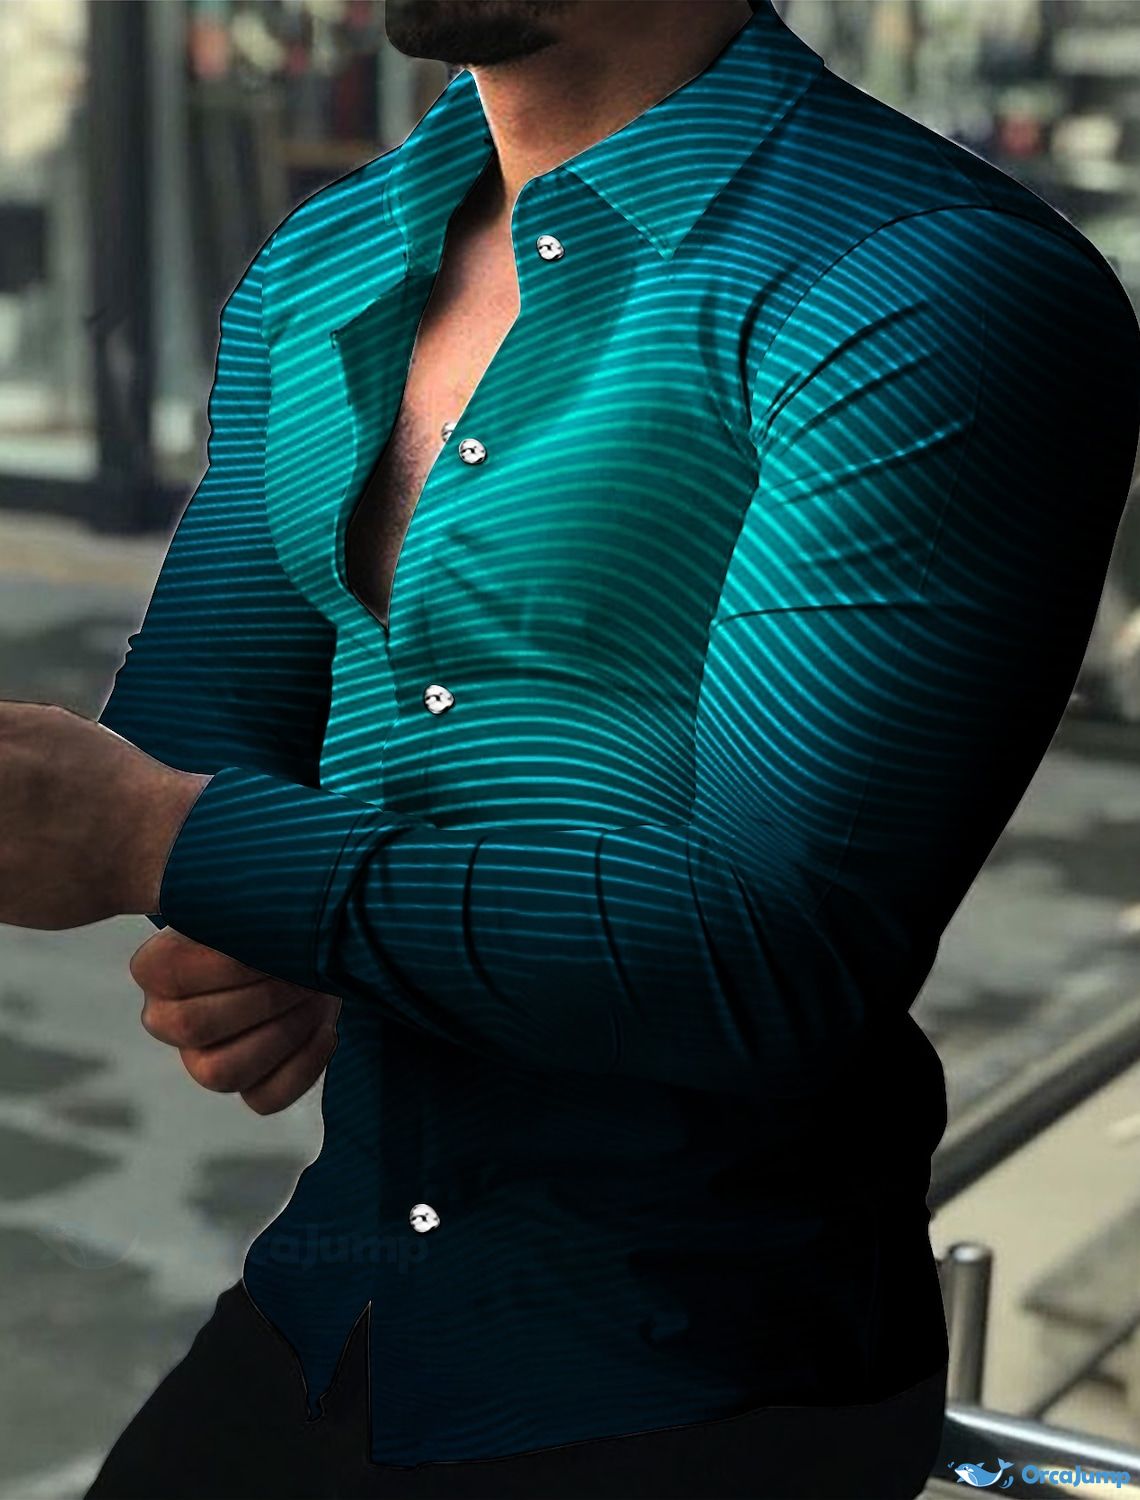 OrcaJump - Mens Long Sleeve Gradient Button Down Shirt - Green Black B